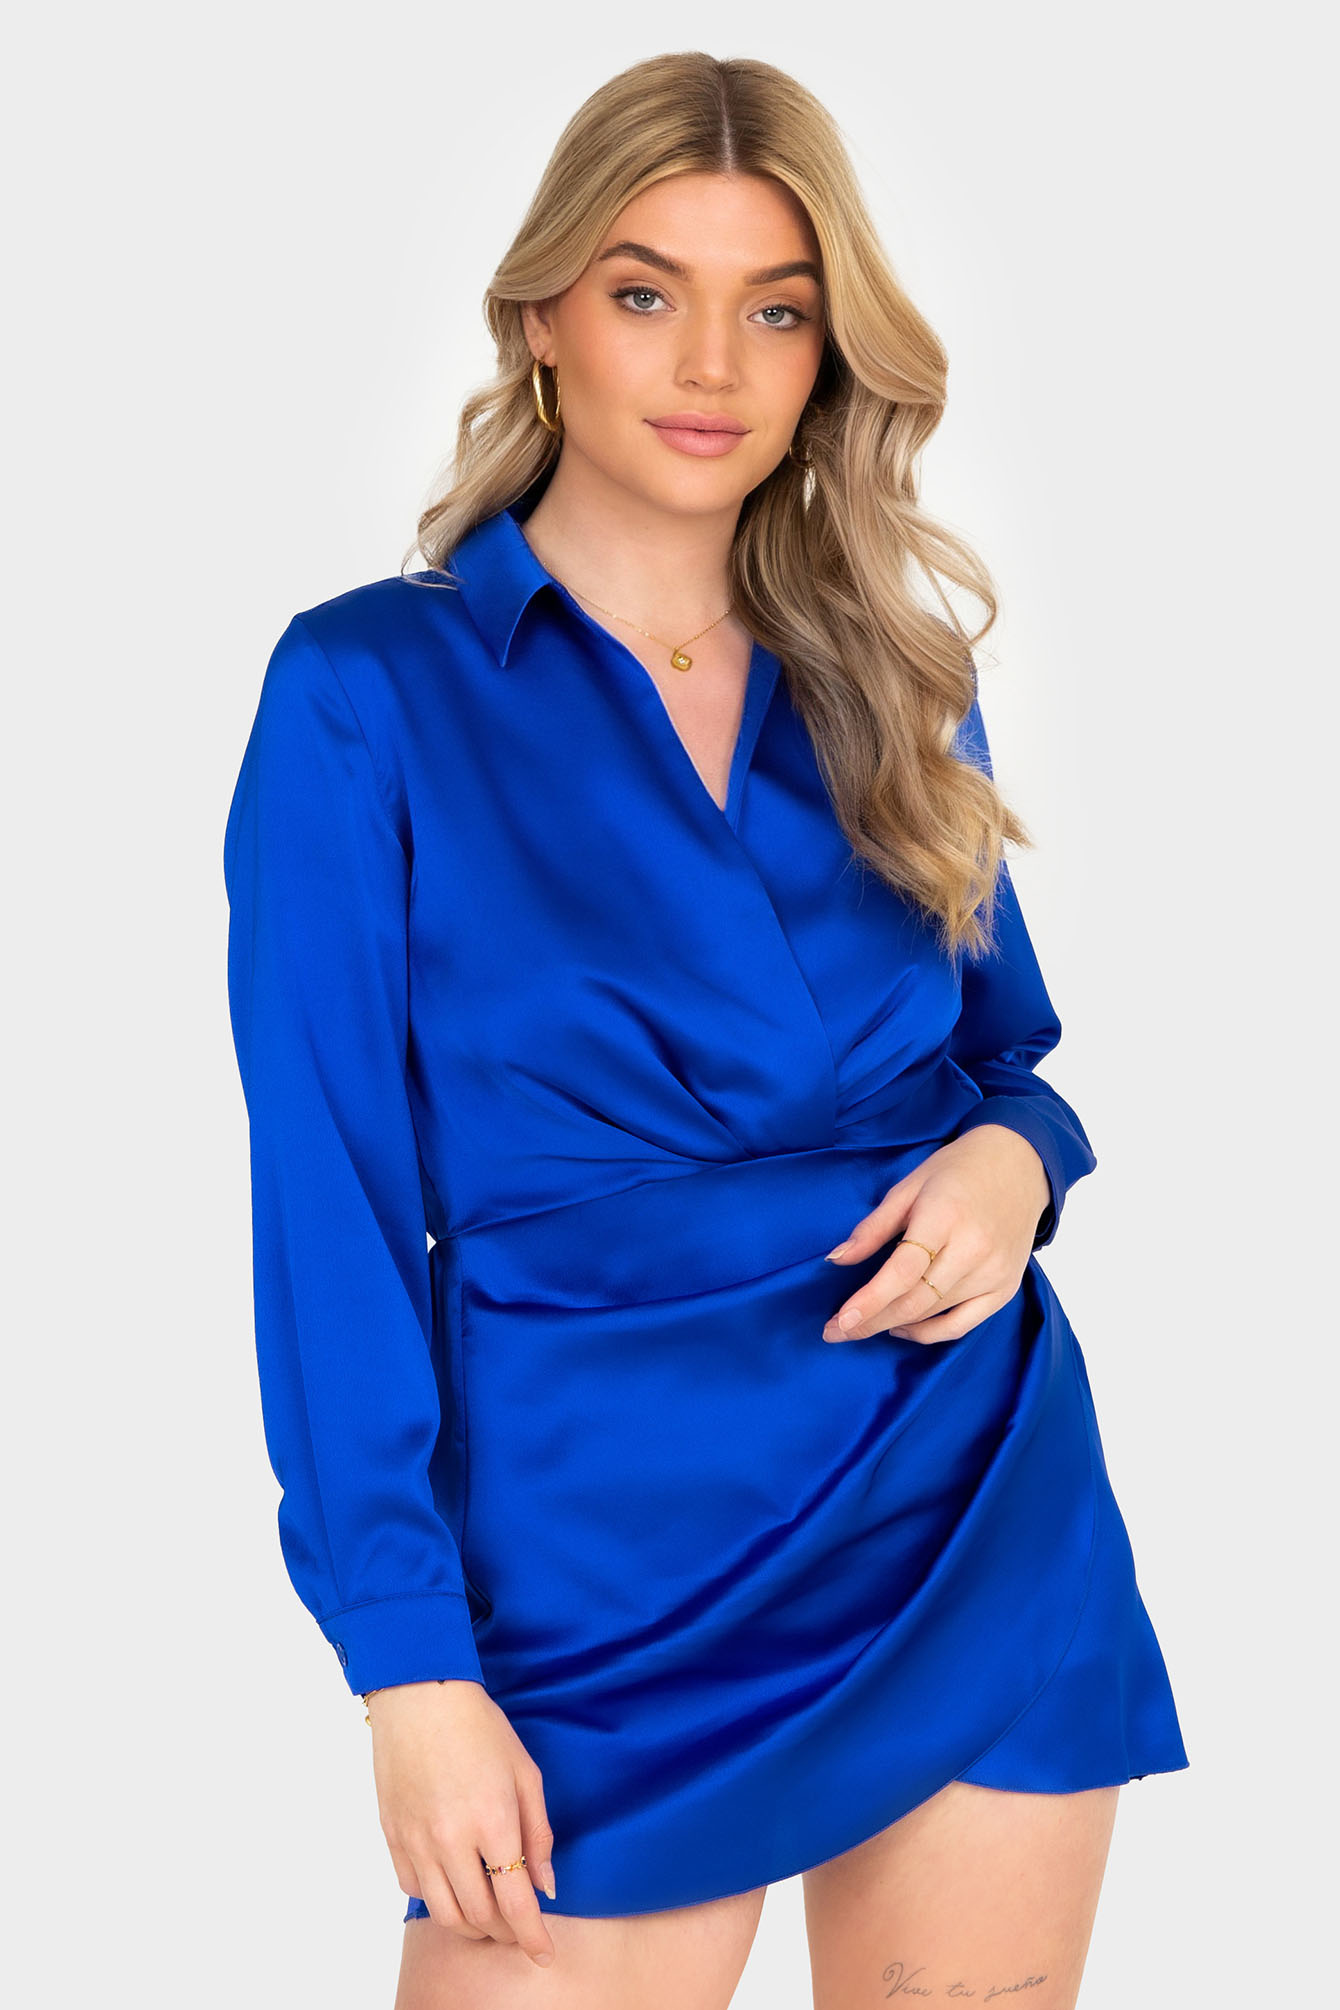 blad kern uitvegen Shop blauwe satijnen jurk | - Elise Store